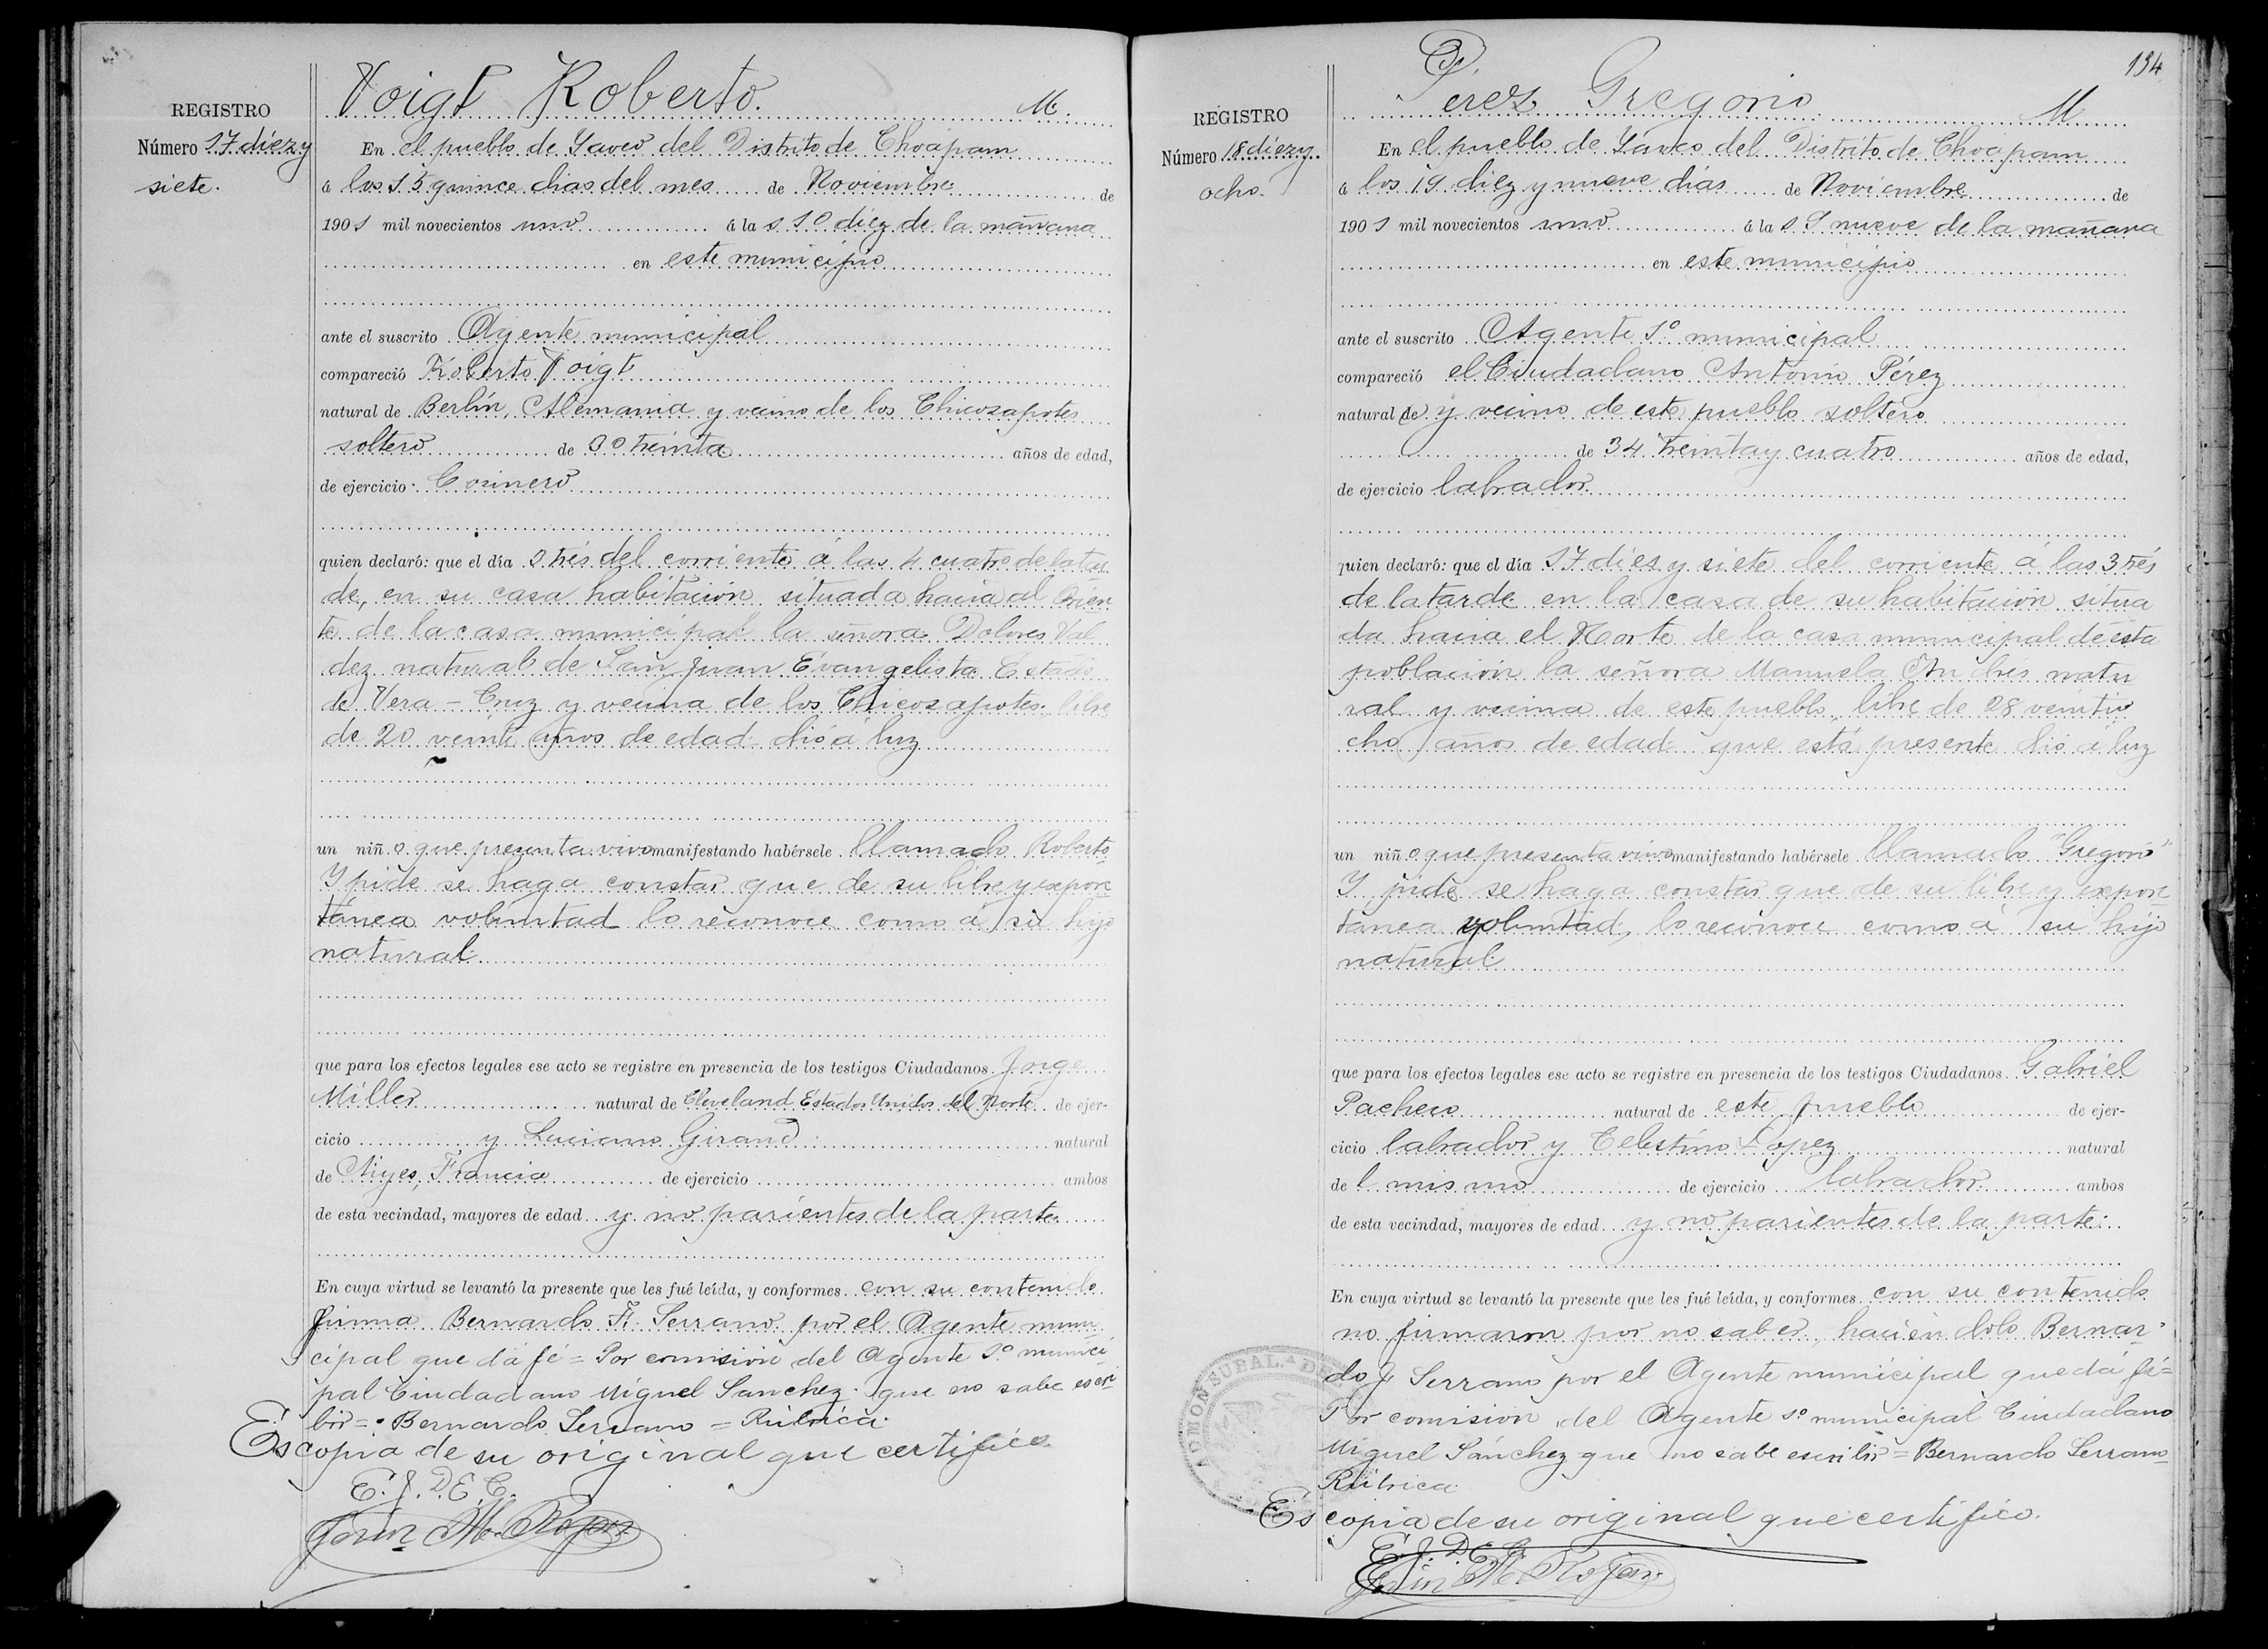 Civil Birth Registration, Oaxaca, México, 1901